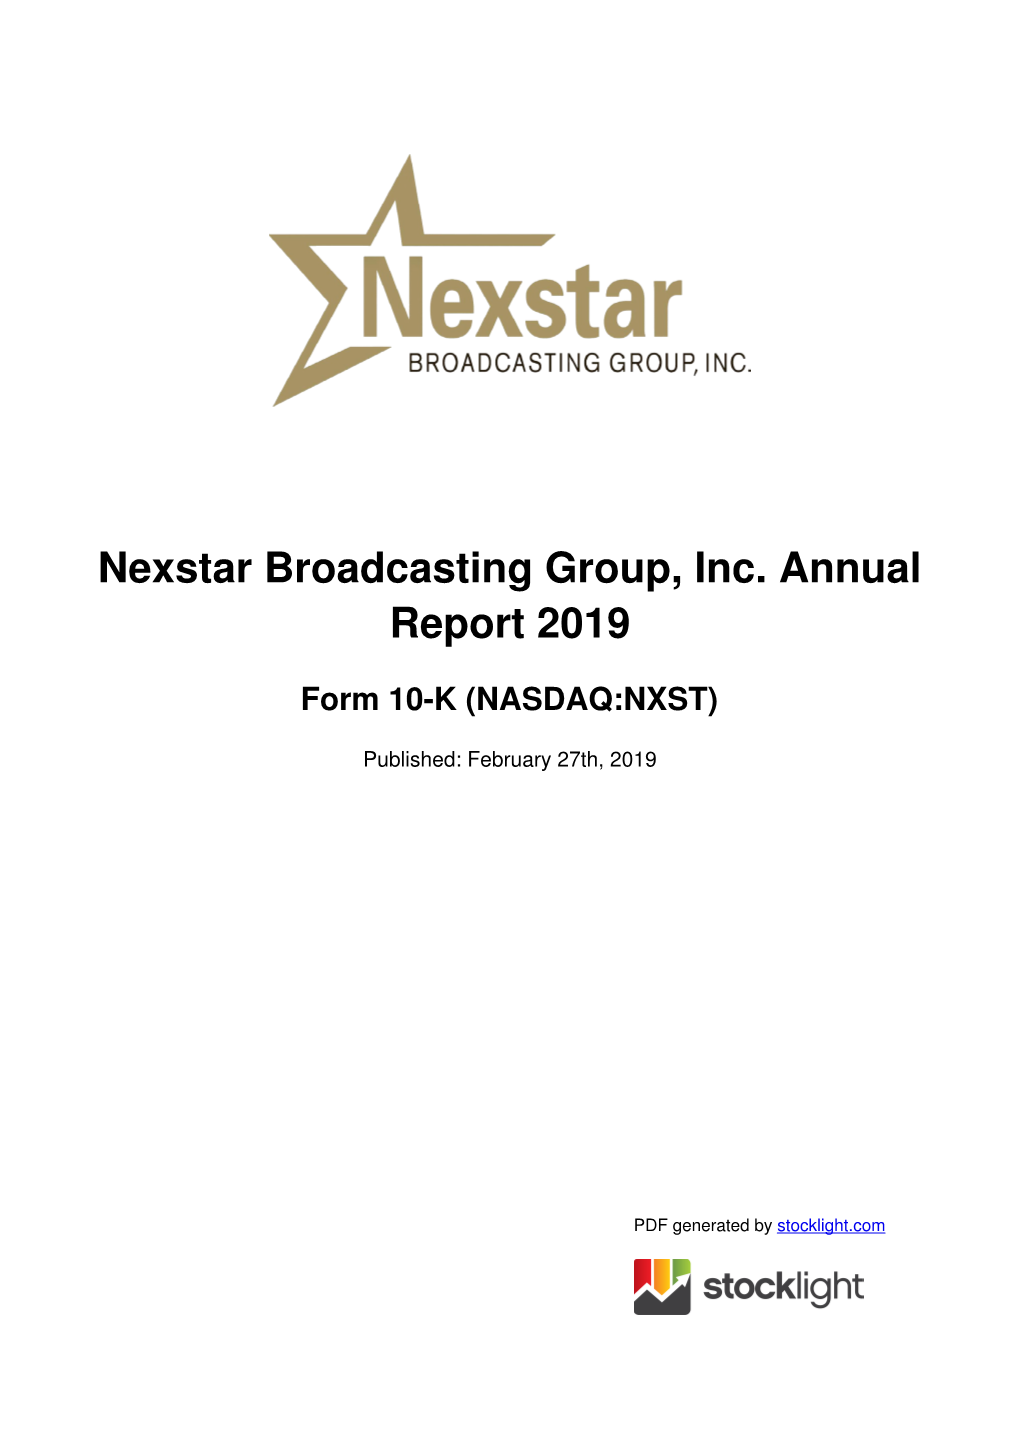 Nexstar Broadcasting Group, Inc. Annual Report 2019